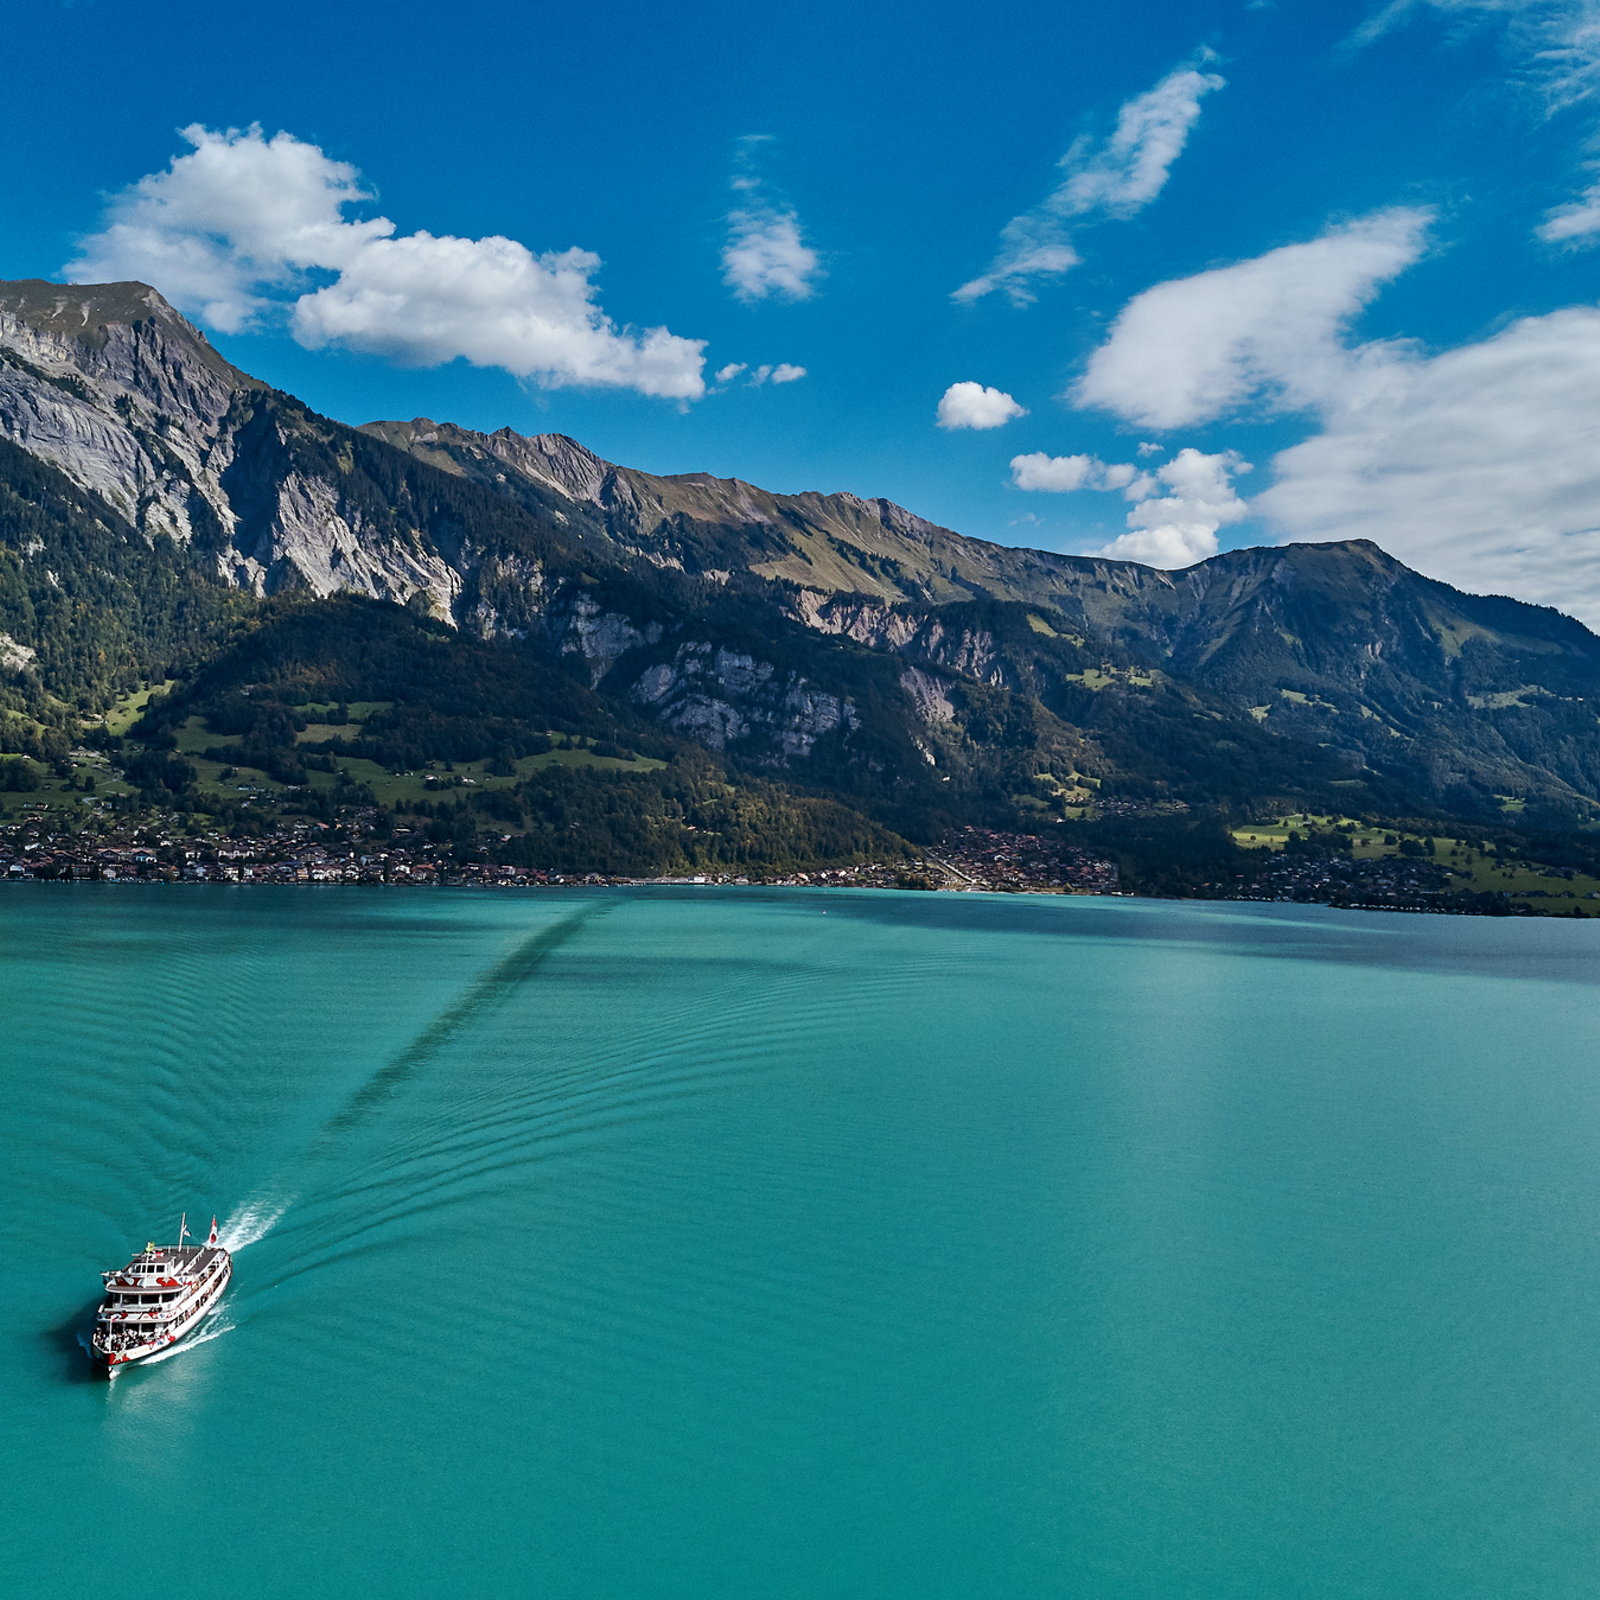 1-Day Boat Pass for Lake Thun & Lake Brienz in Switzerland